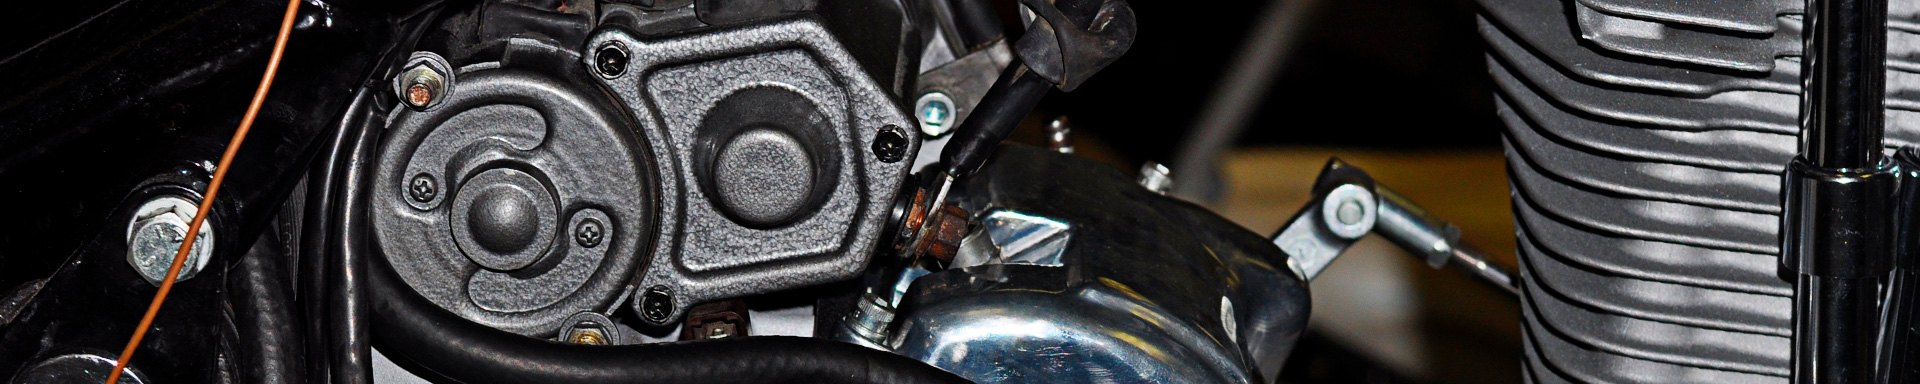 Motorcycle Starting & Charging Parts